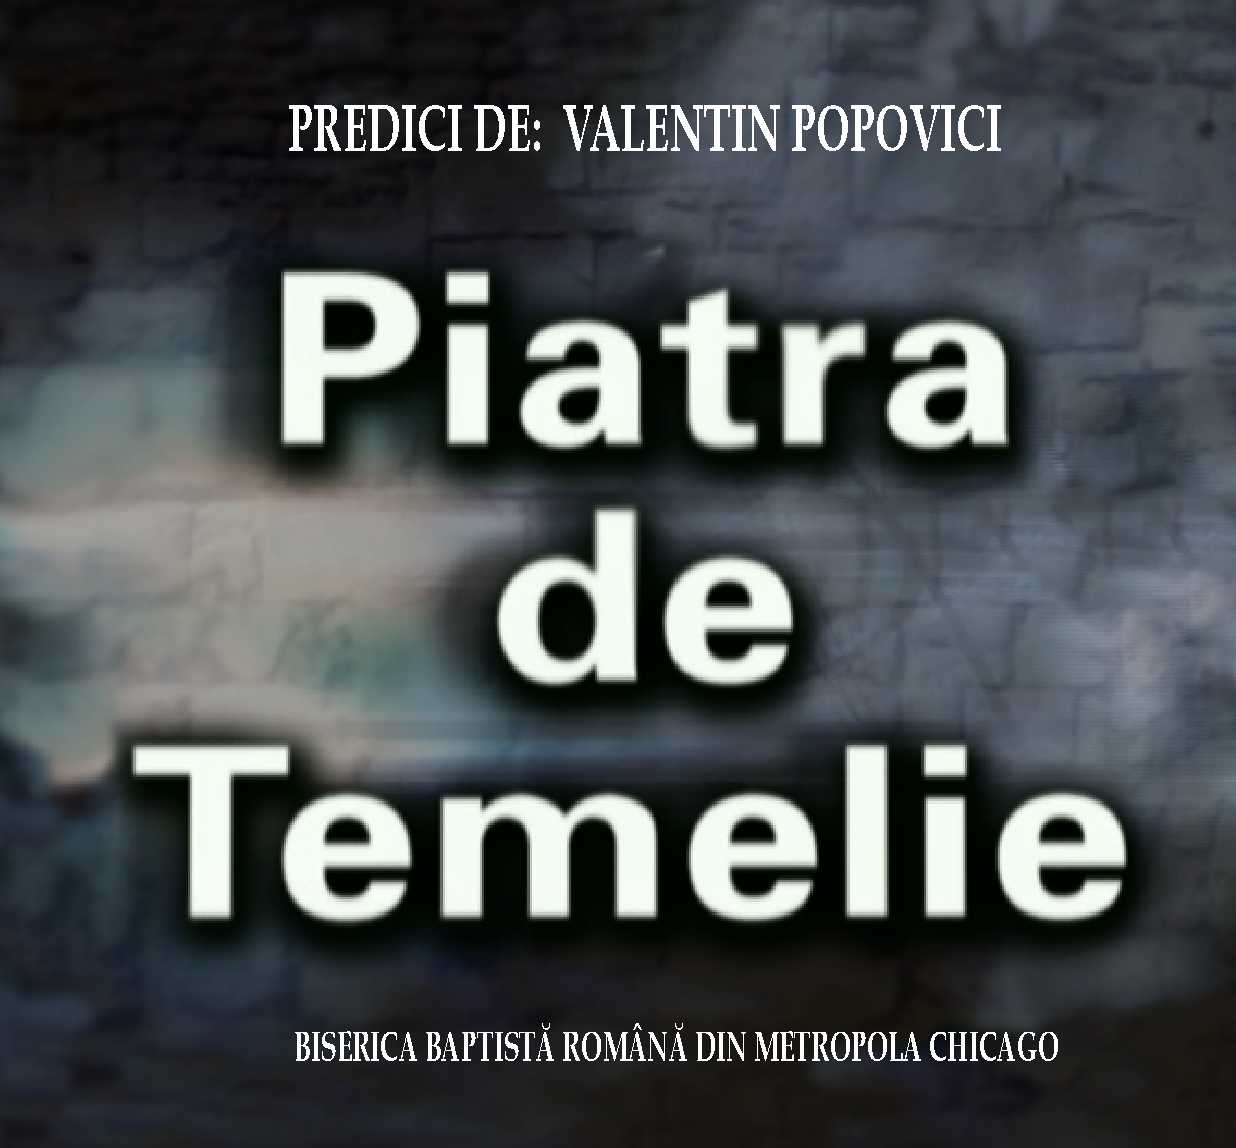 Piatra de Temelie: predici de Valentin Popovici